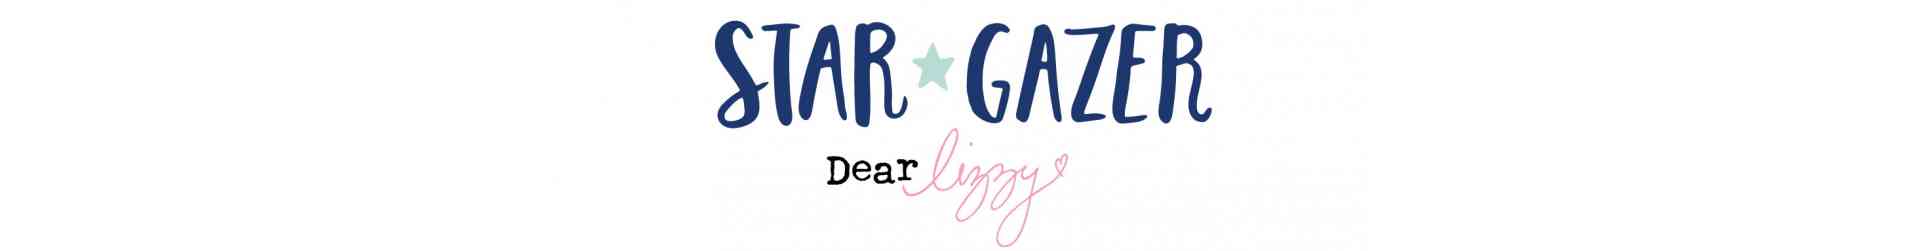 STAR GAZER - Dear Lizzy